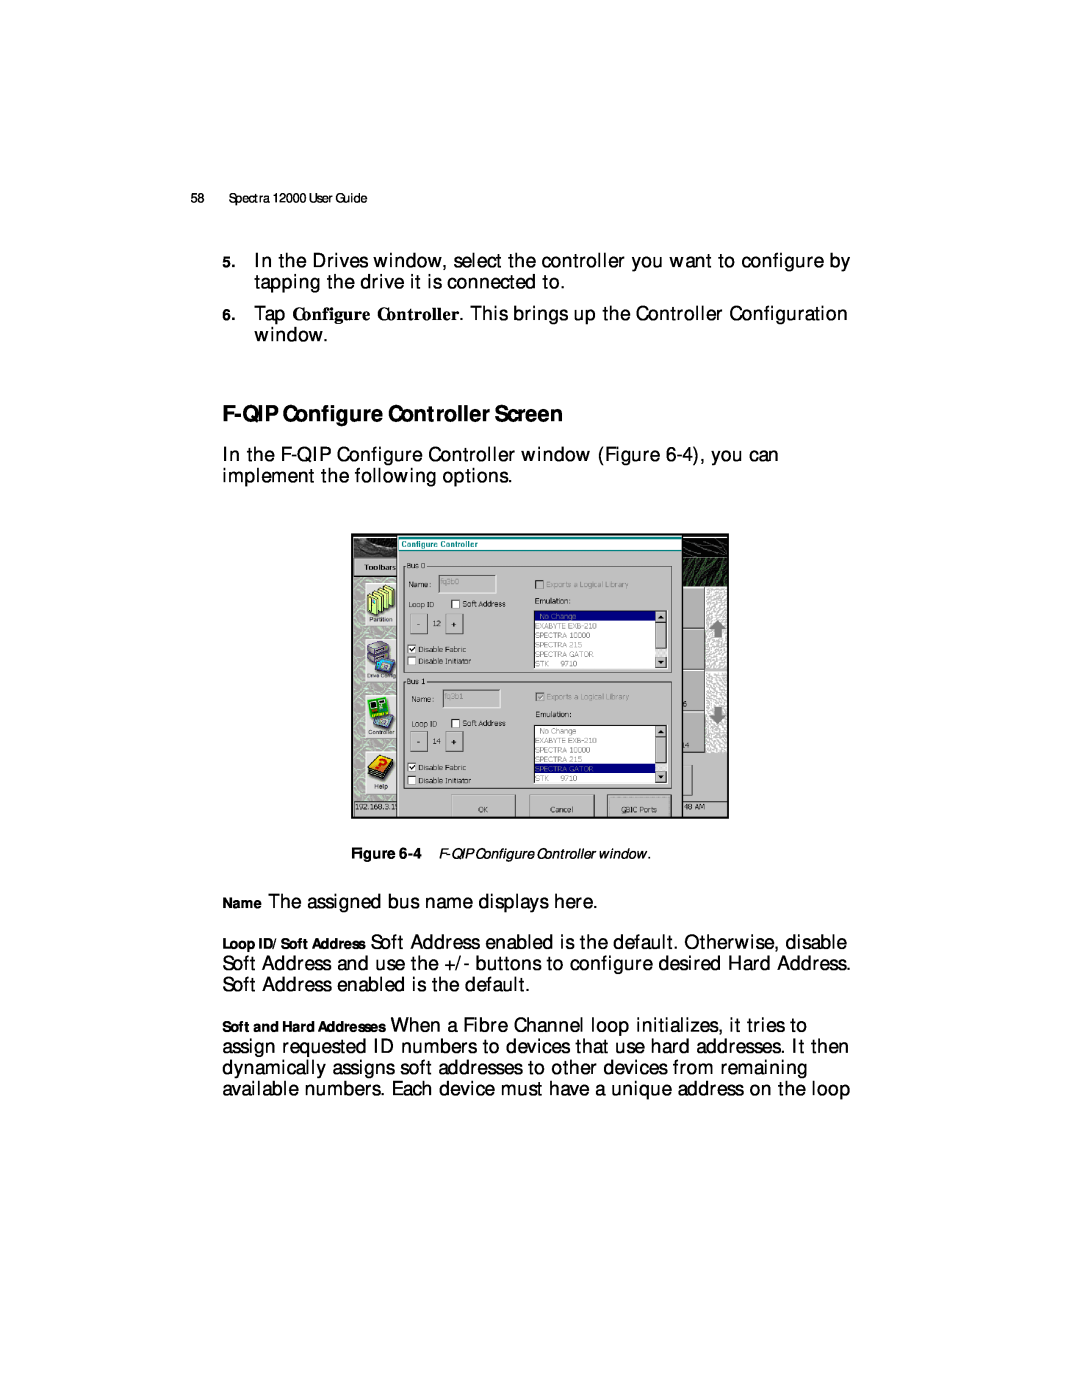 Spectra Logic Spectra 12000 manual F-QIP Configure Controller Screen, 4 F-QIP Configure Controller window 